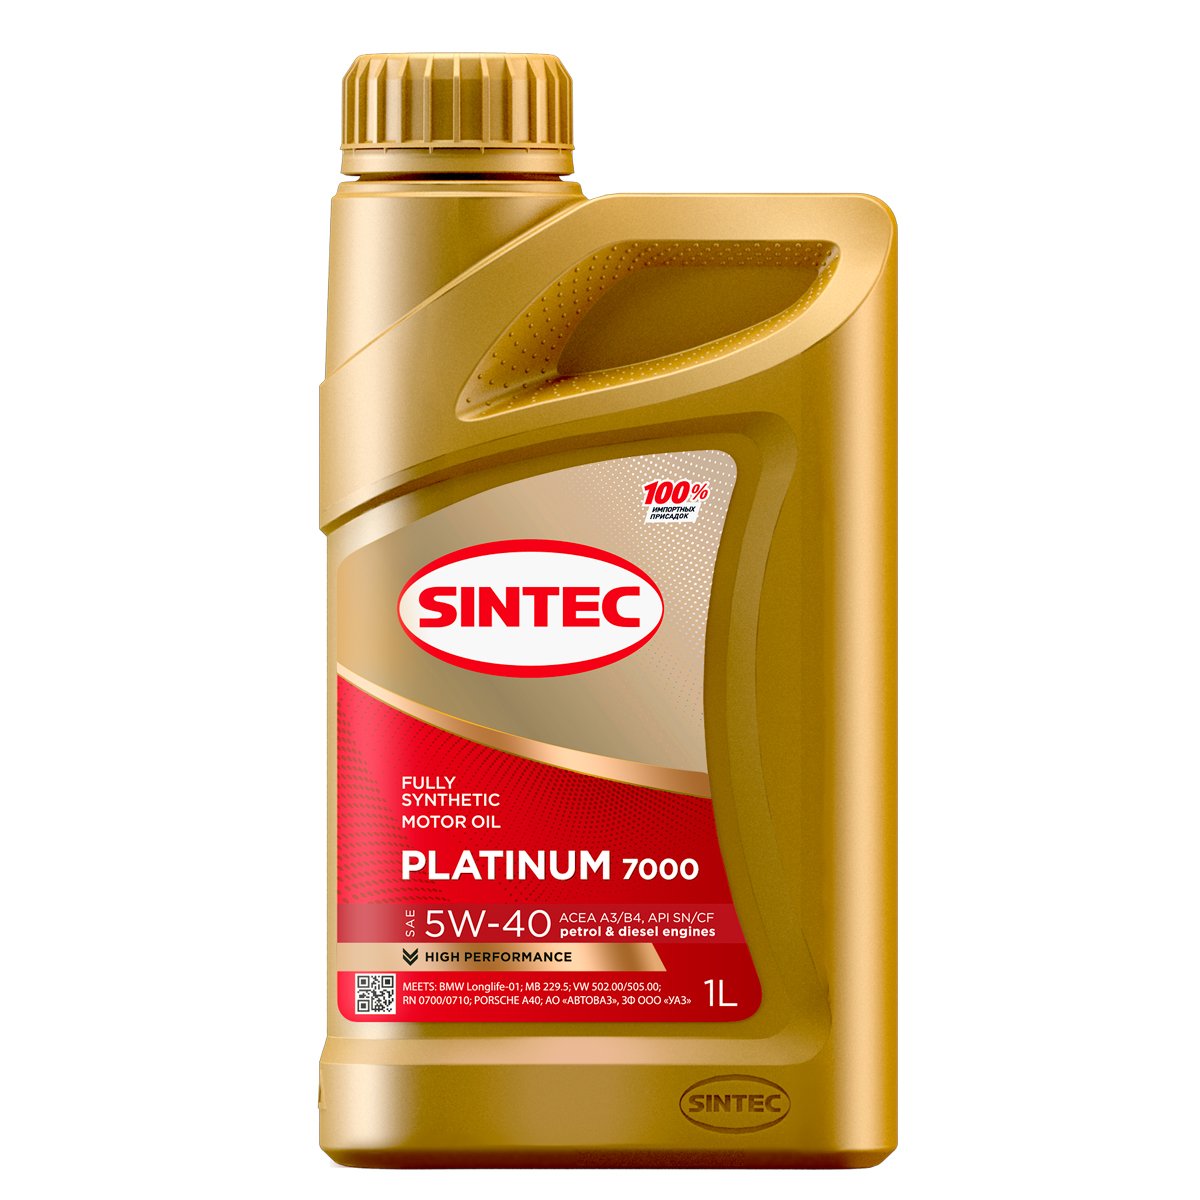 SINTEC PLATINUM 7000 5w40 A3/B4 SN/CF 1L синтетическое моторное масло